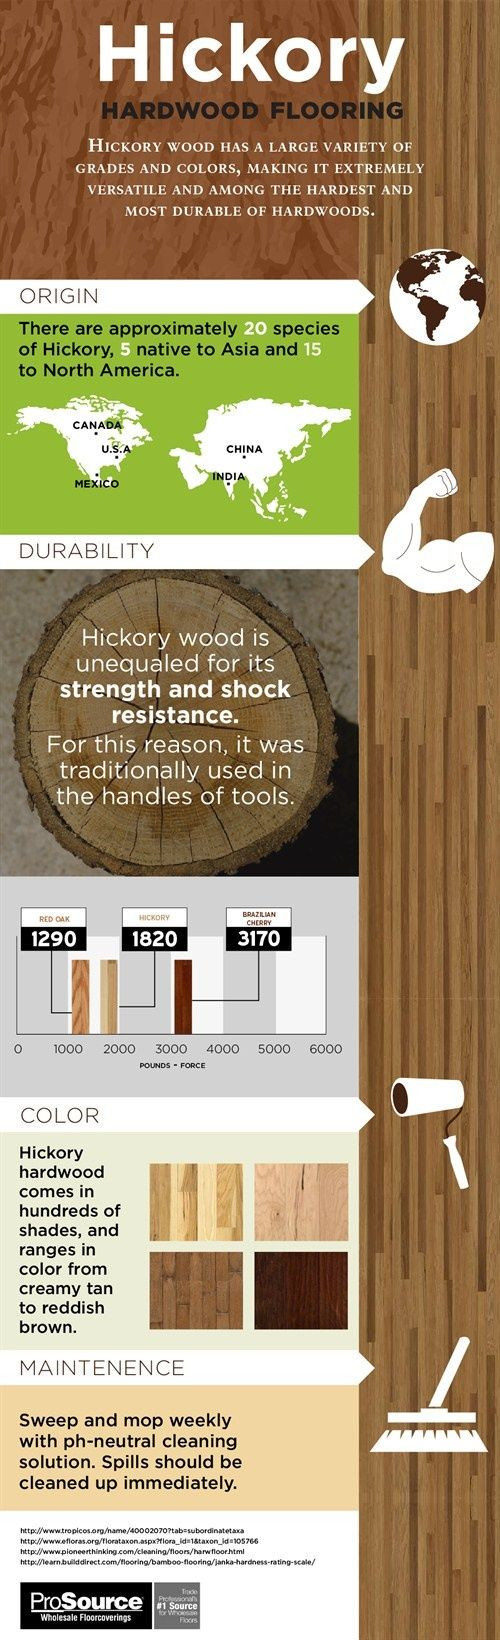 16 Stylish Hardwood Flooring Facts 2024 free download hardwood flooring facts of the 14 best hardwood knowledge images on pinterest wood flooring with hickory hardwood flooring